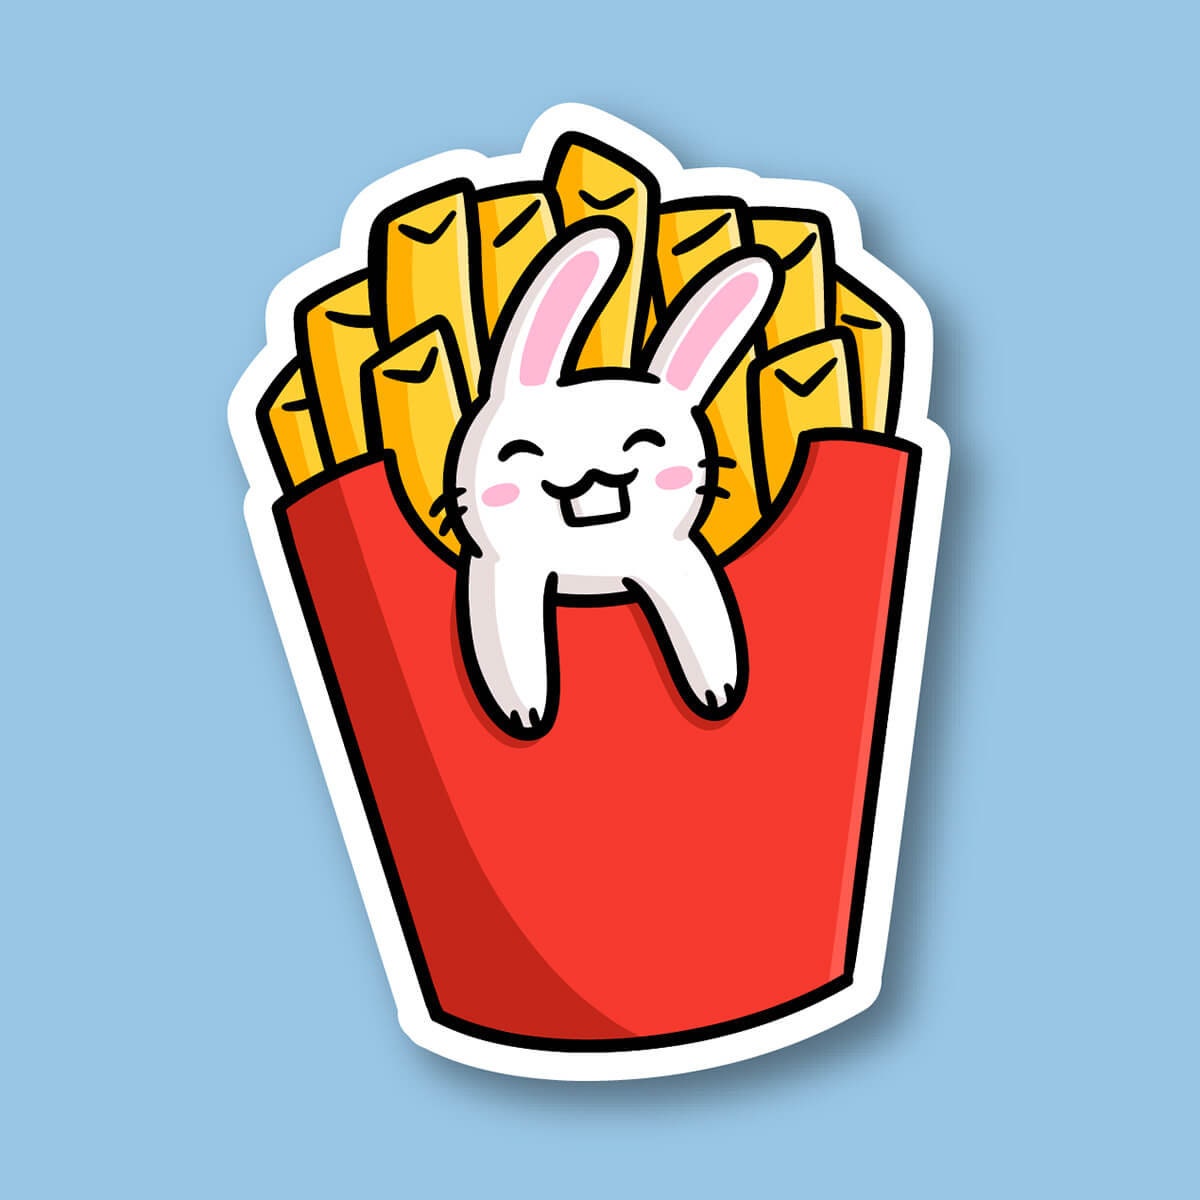 French Fries Bunny Sticker